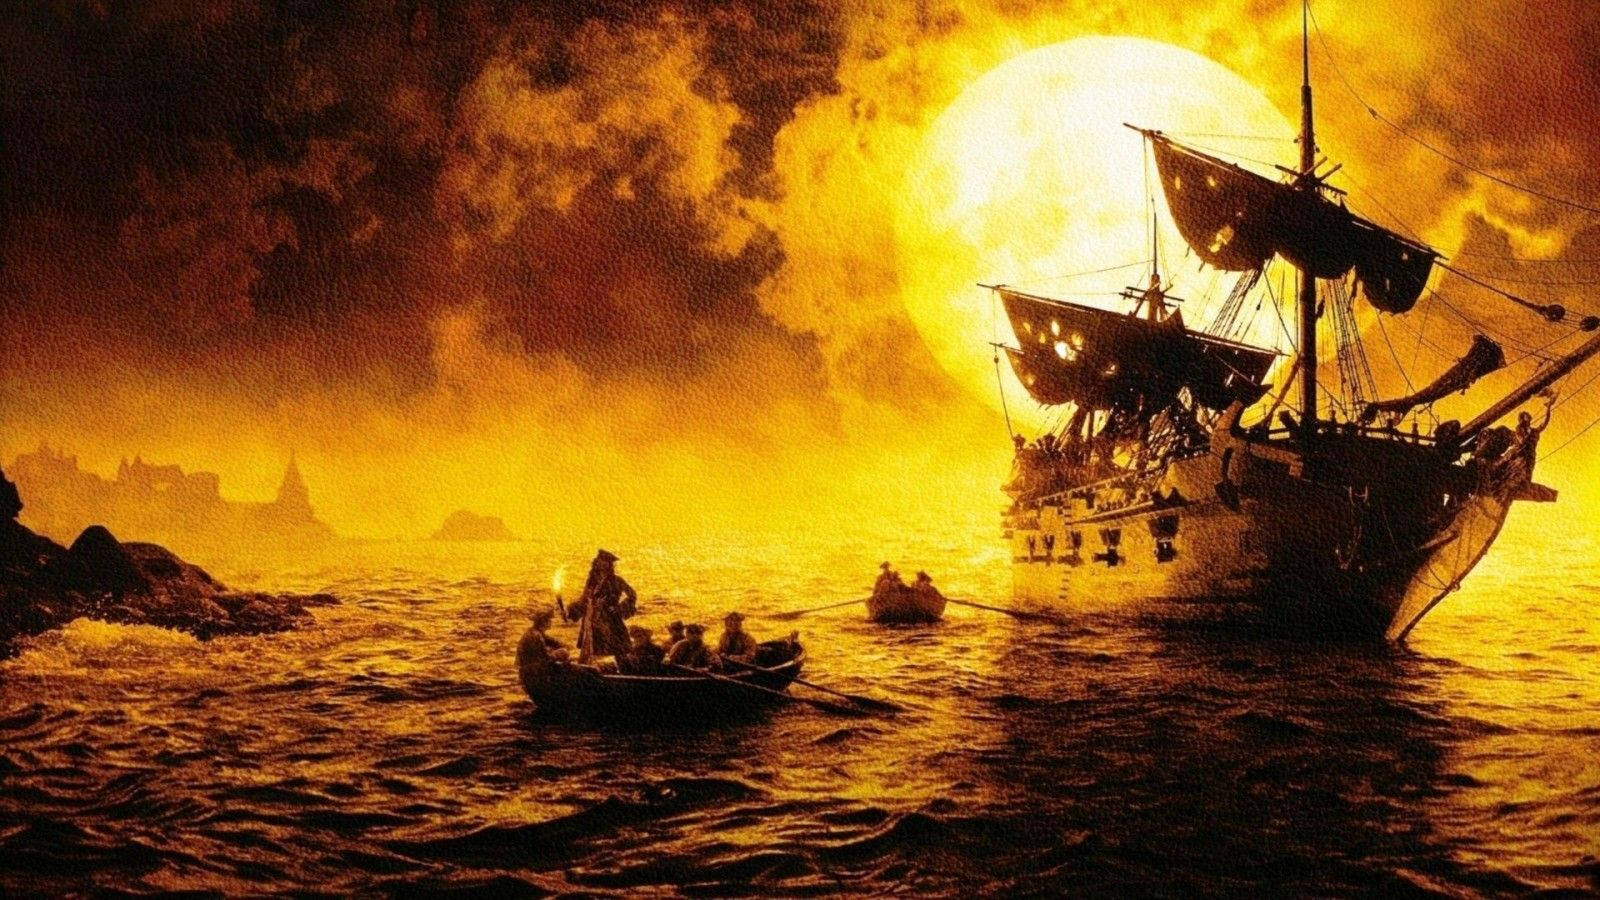 Arrr, a pirate ship battles the waves amidst the setting sun Wallpaper